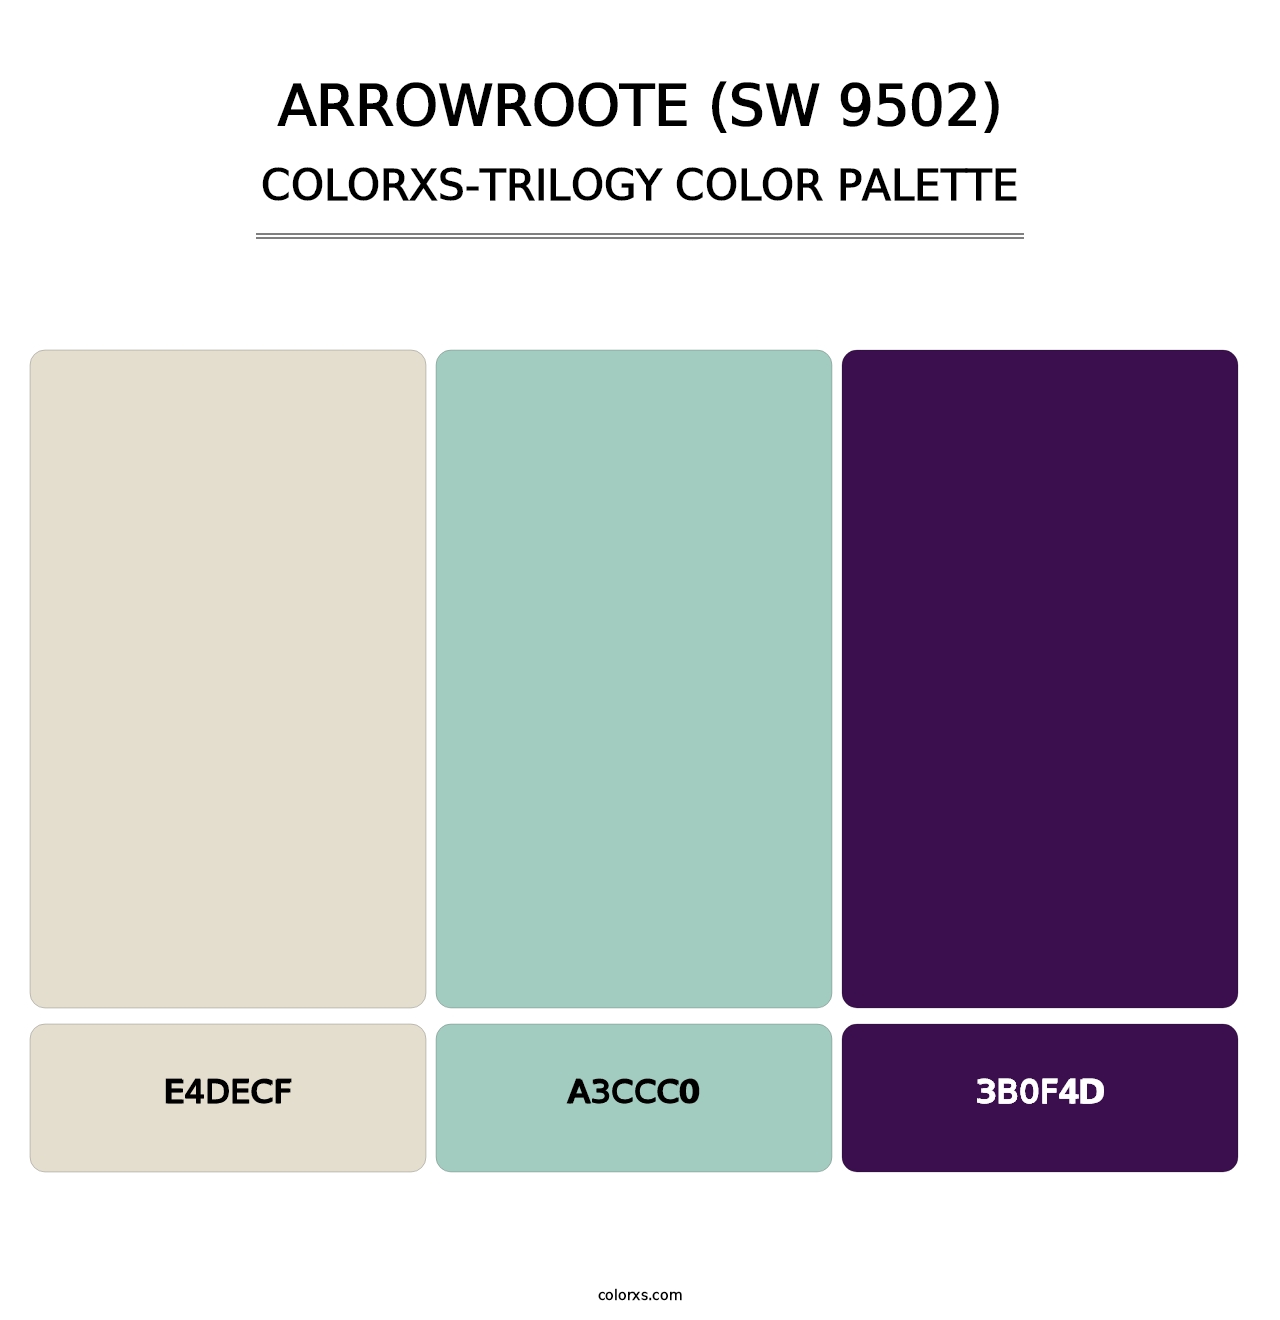 Arrowroote (SW 9502) - Colorxs Trilogy Palette